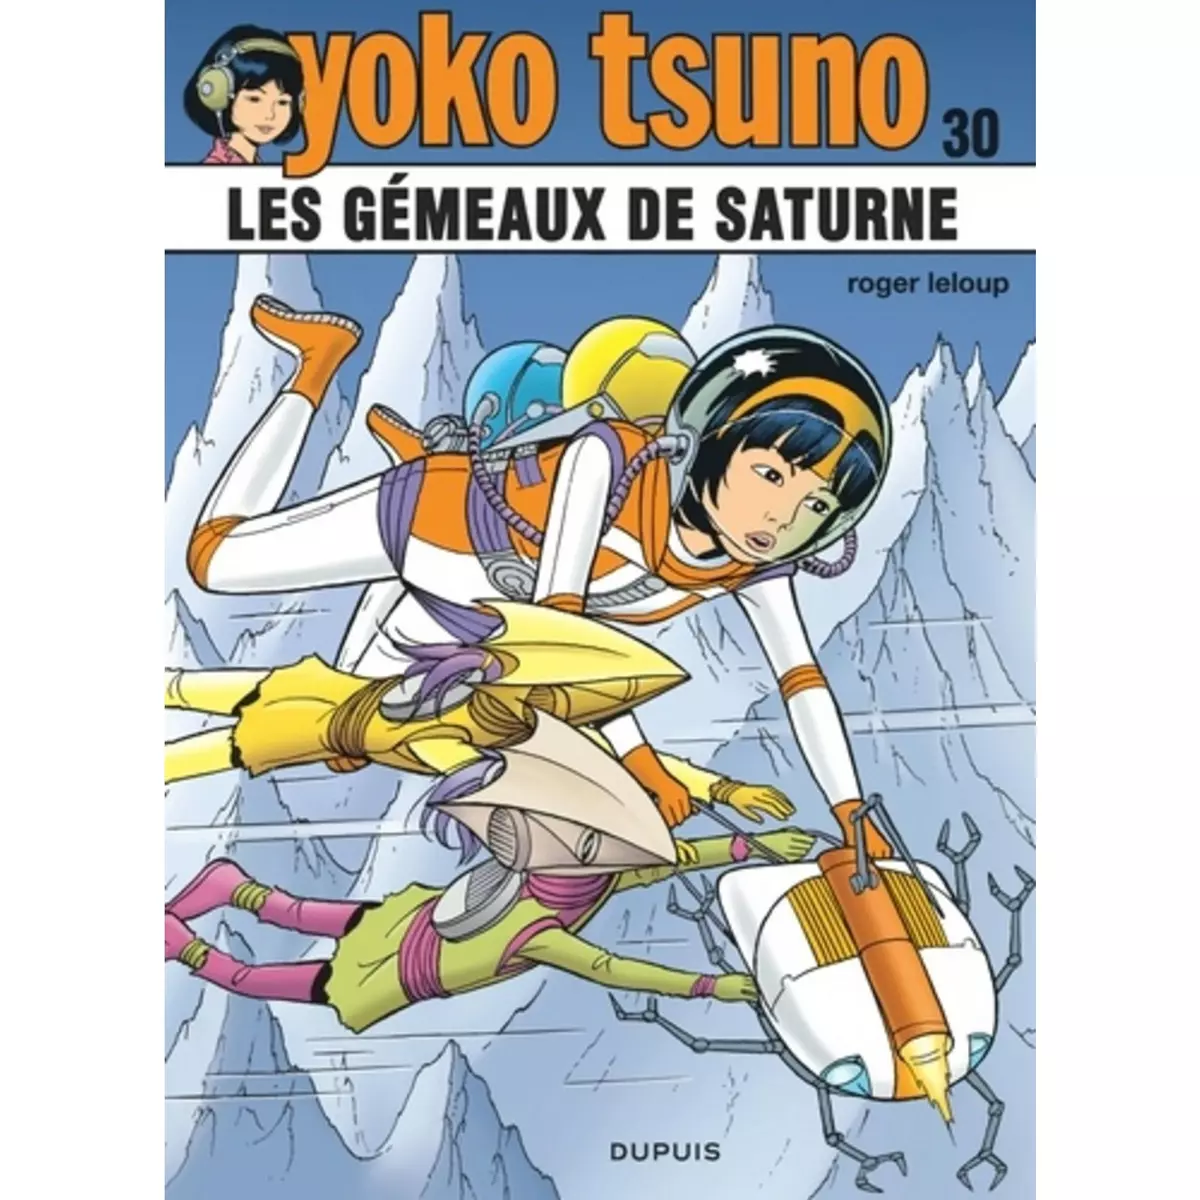  YOKO TSUNO TOME 30 : LES GEMEAUX DE SATURNE, Leloup Roger